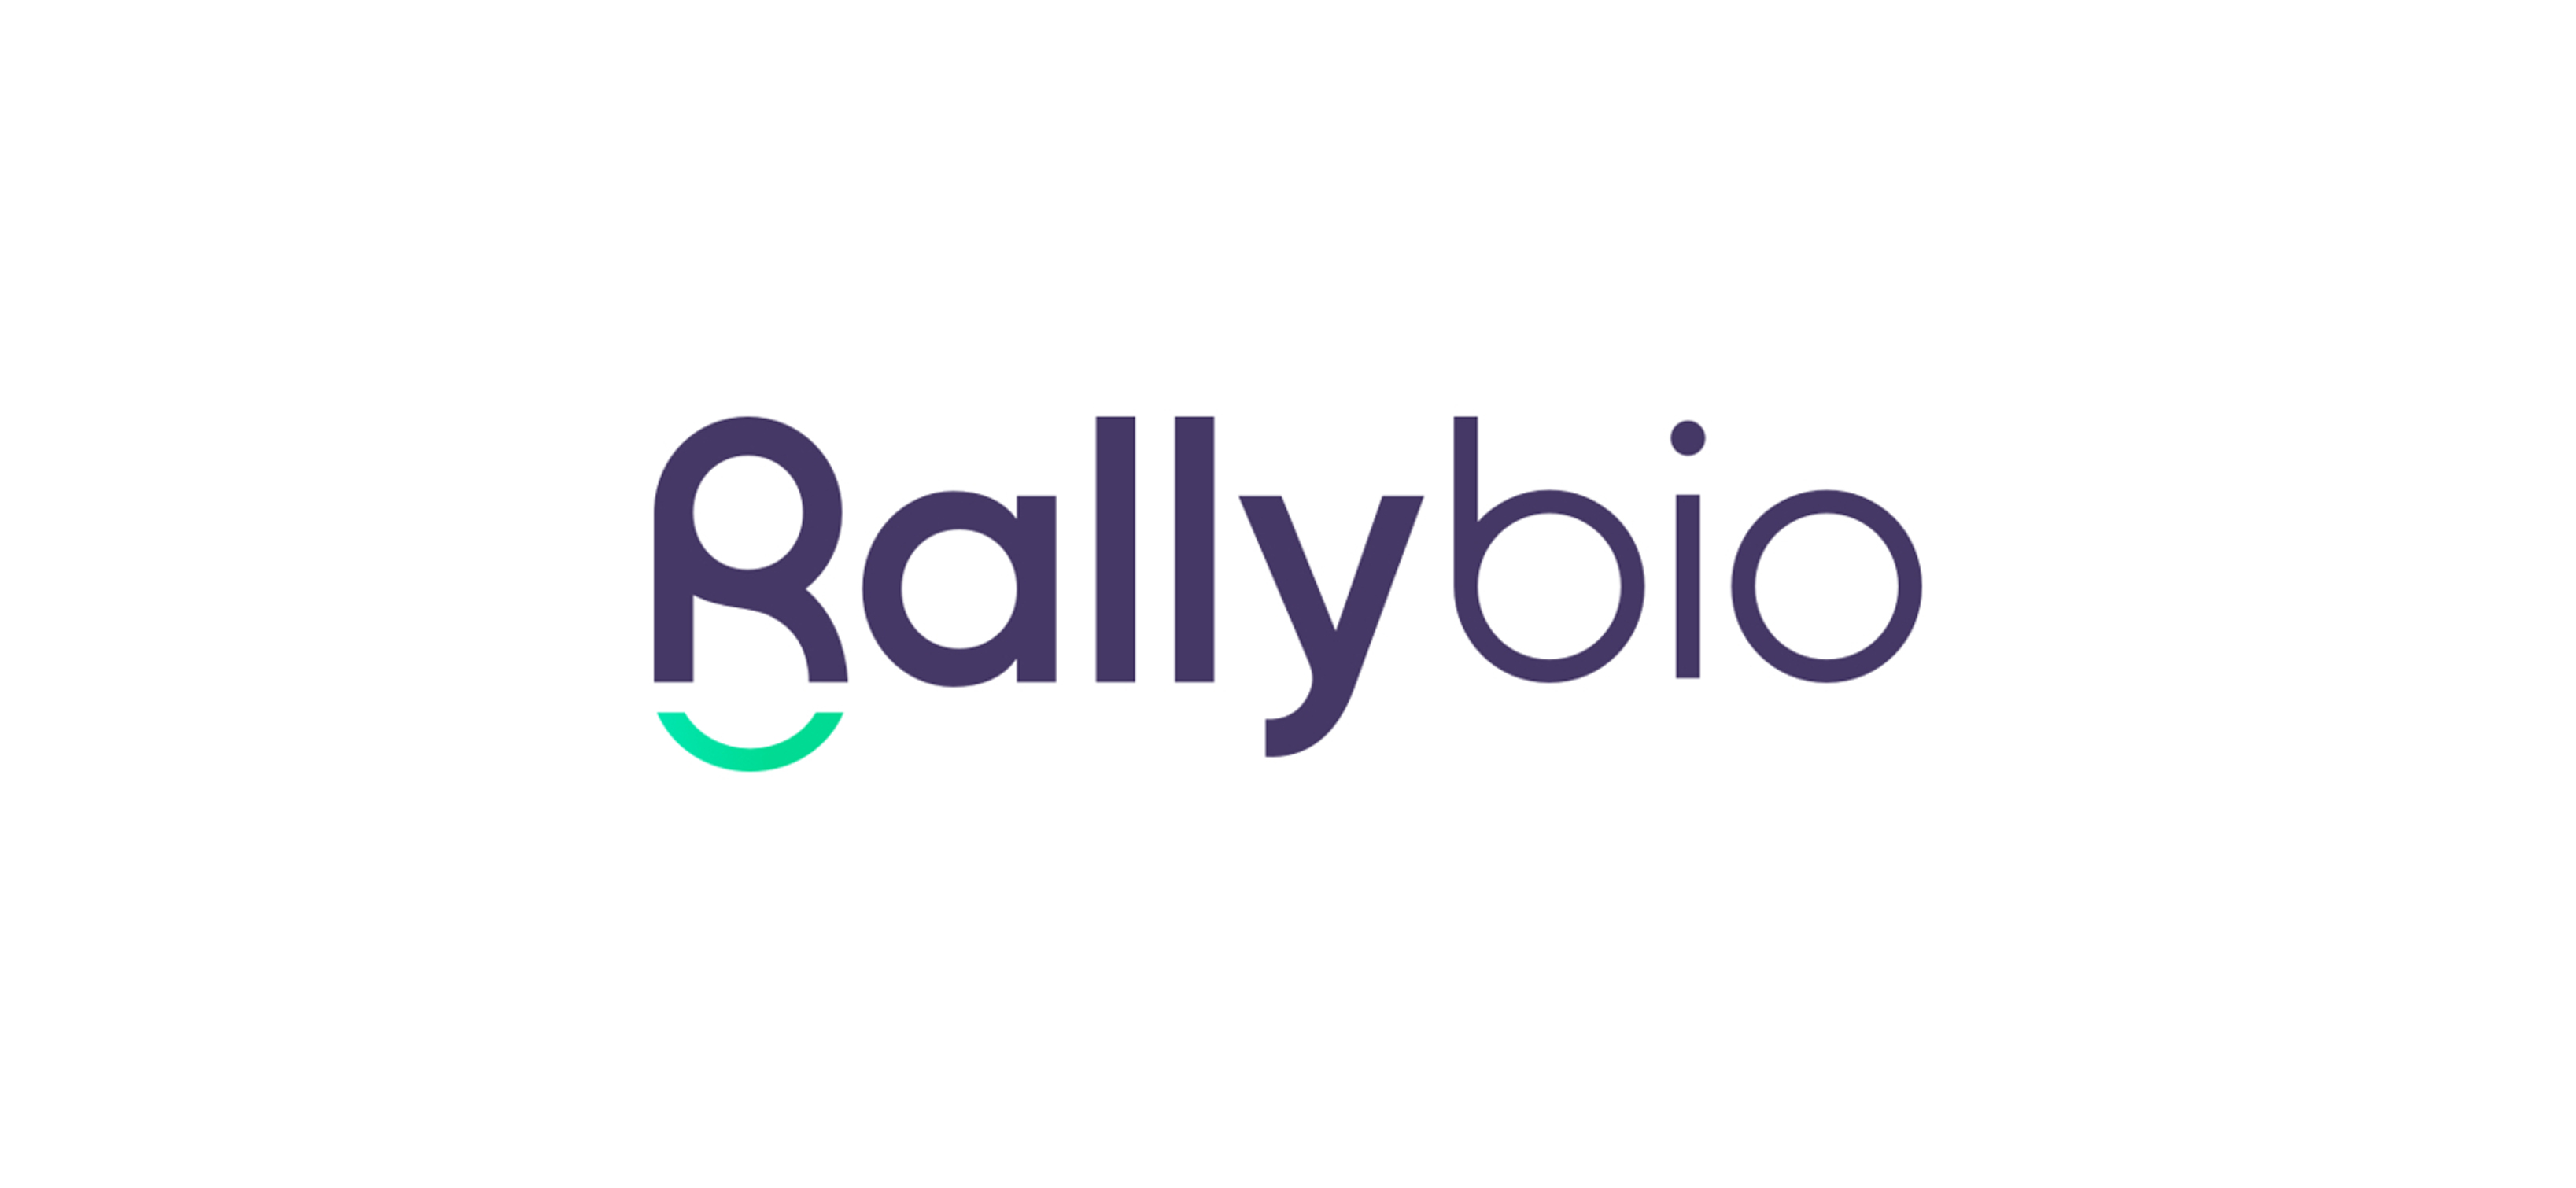 RallyBio_logo.jpg